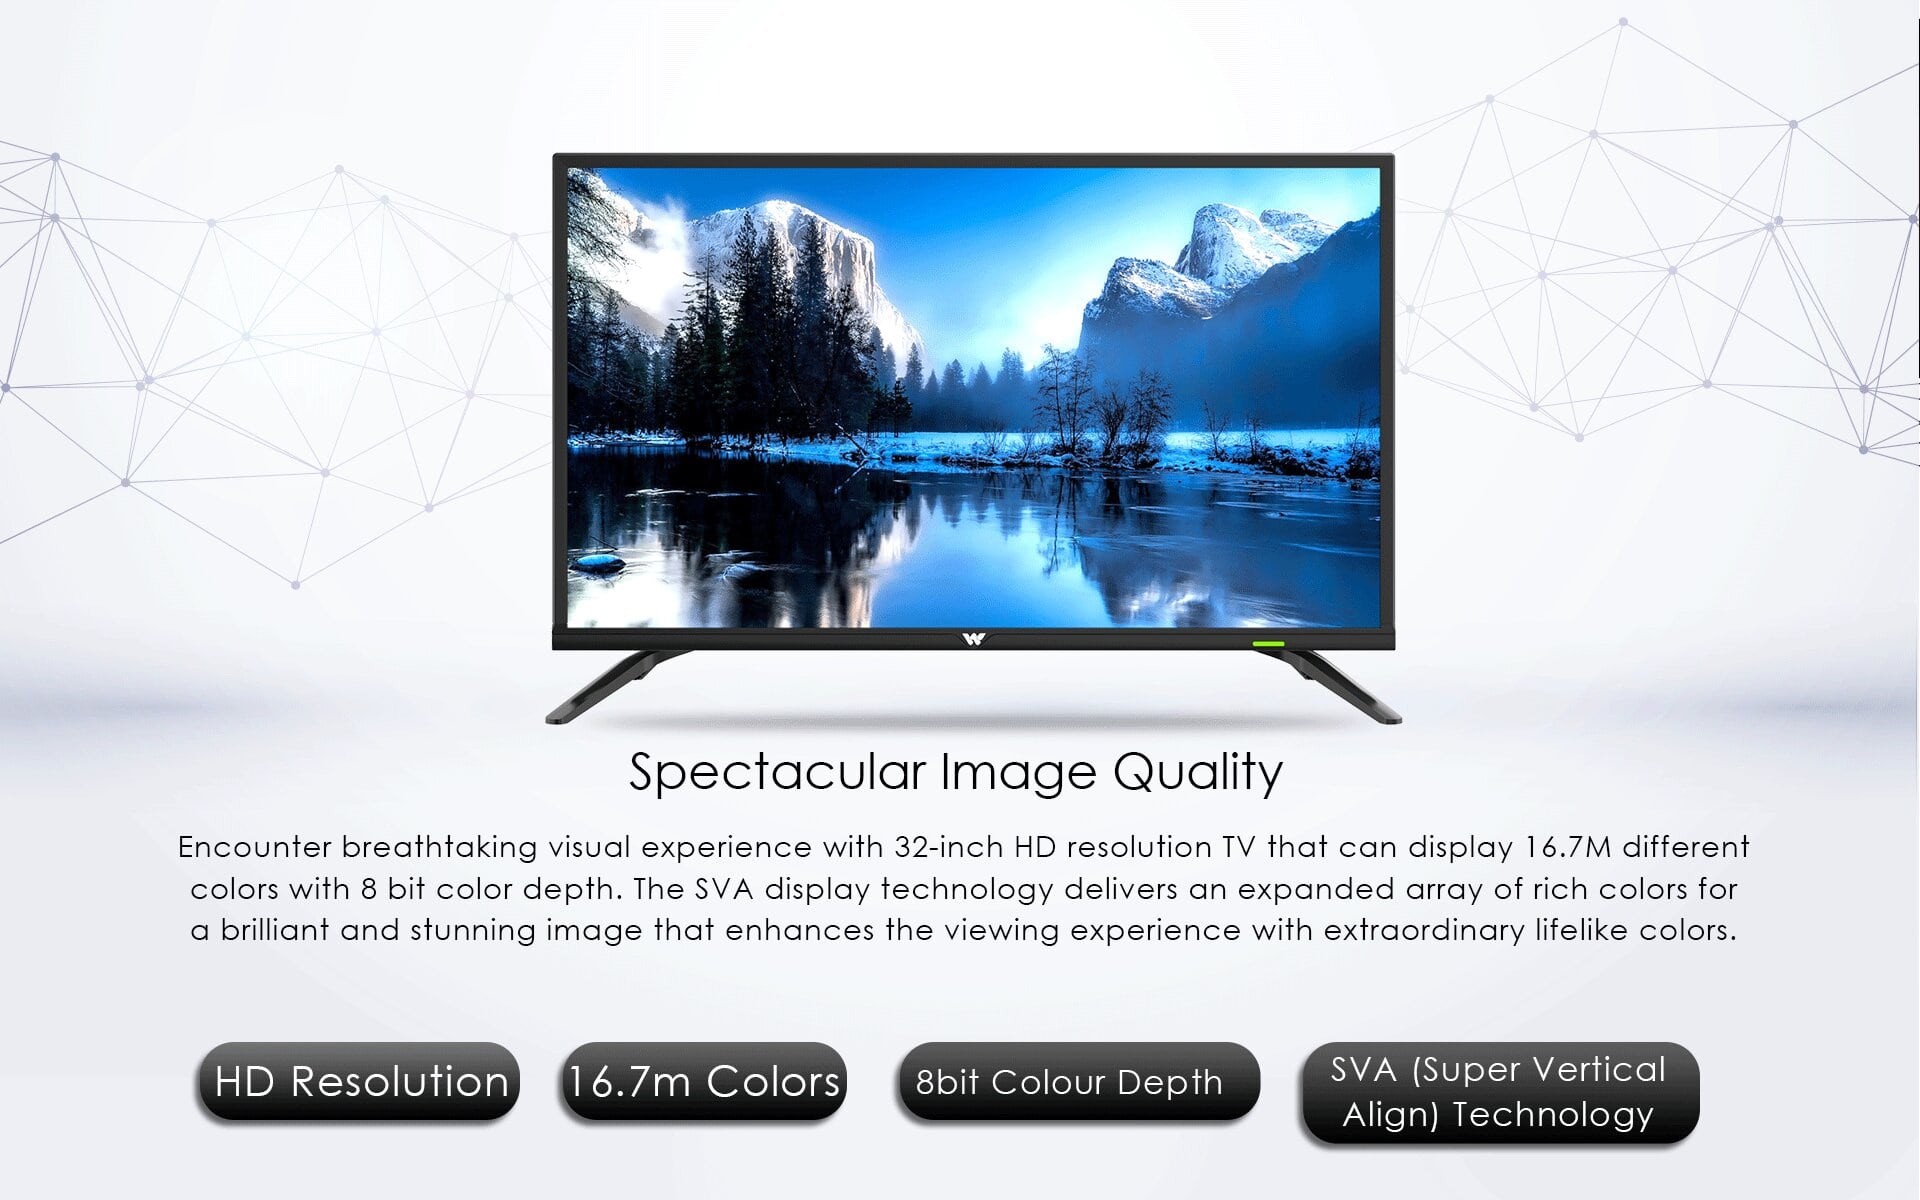 Walton W32F110 (813mm) 32 Inch LED TV Price In BD | Tech Deal